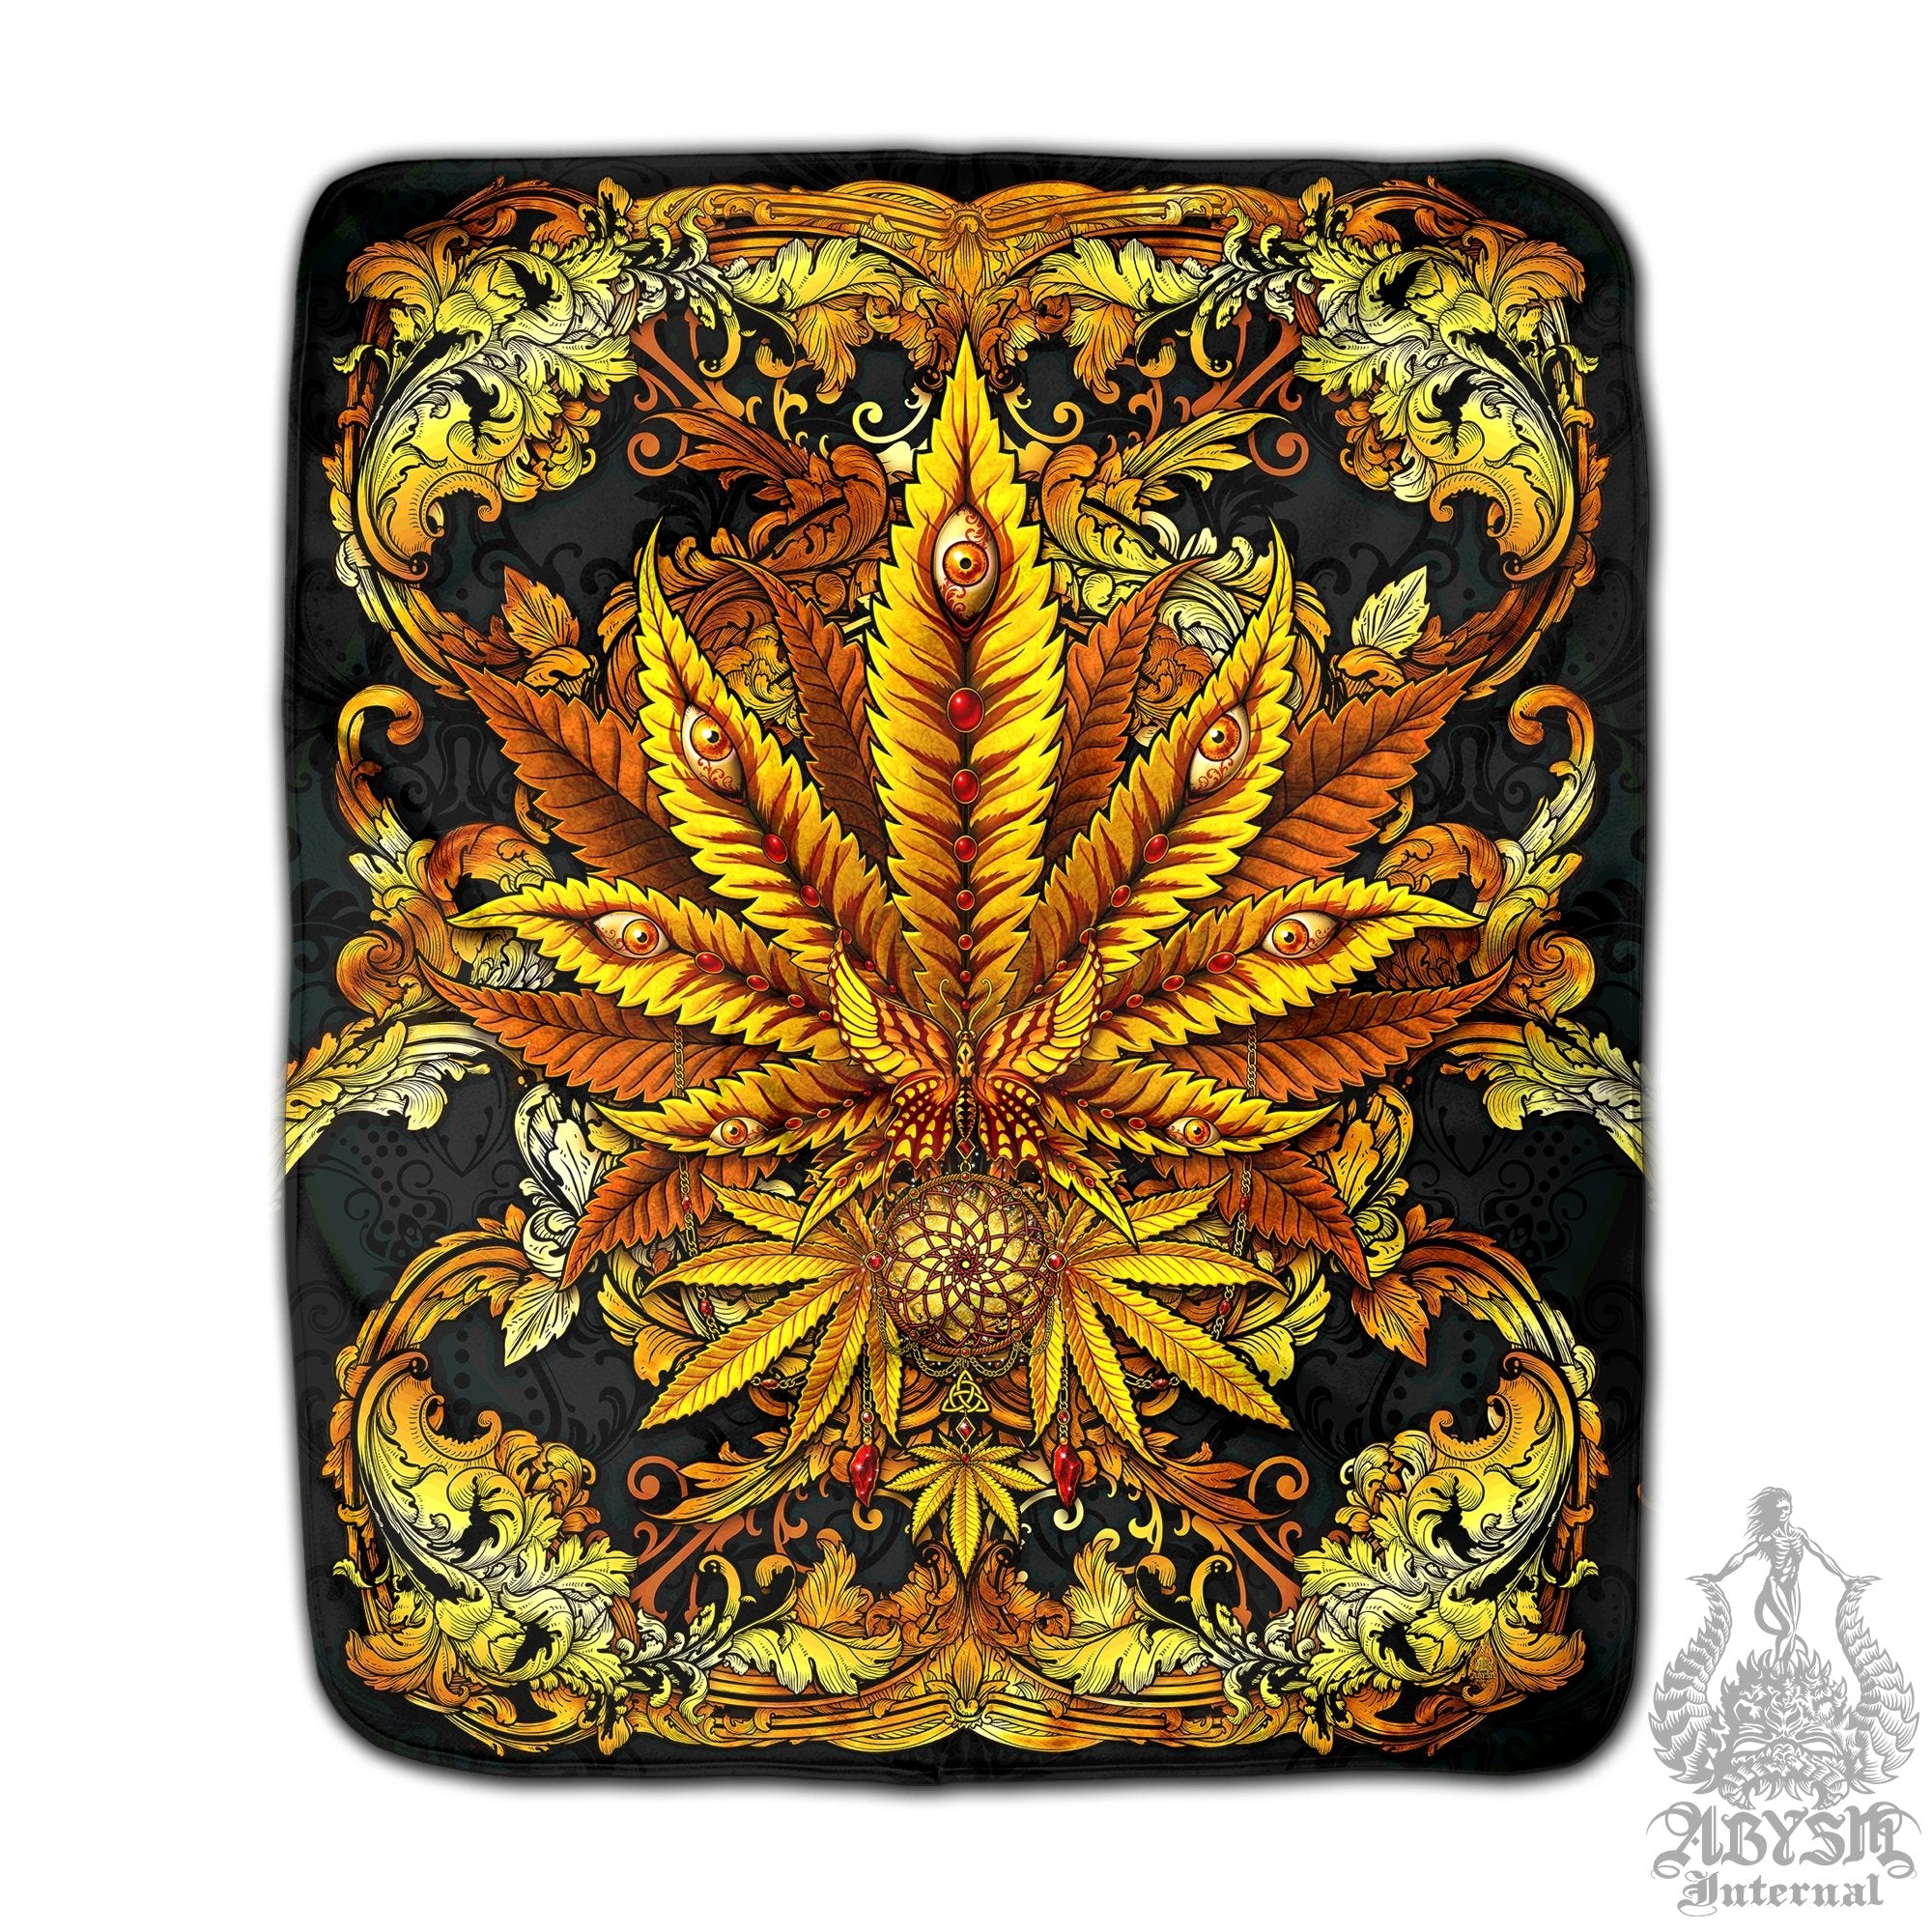 Weed Throw Fleece Blanket, Cannabis Art, Indie and Hippie Home Decor, 420 Gift - Marijuana, Gold - Abysm Internal